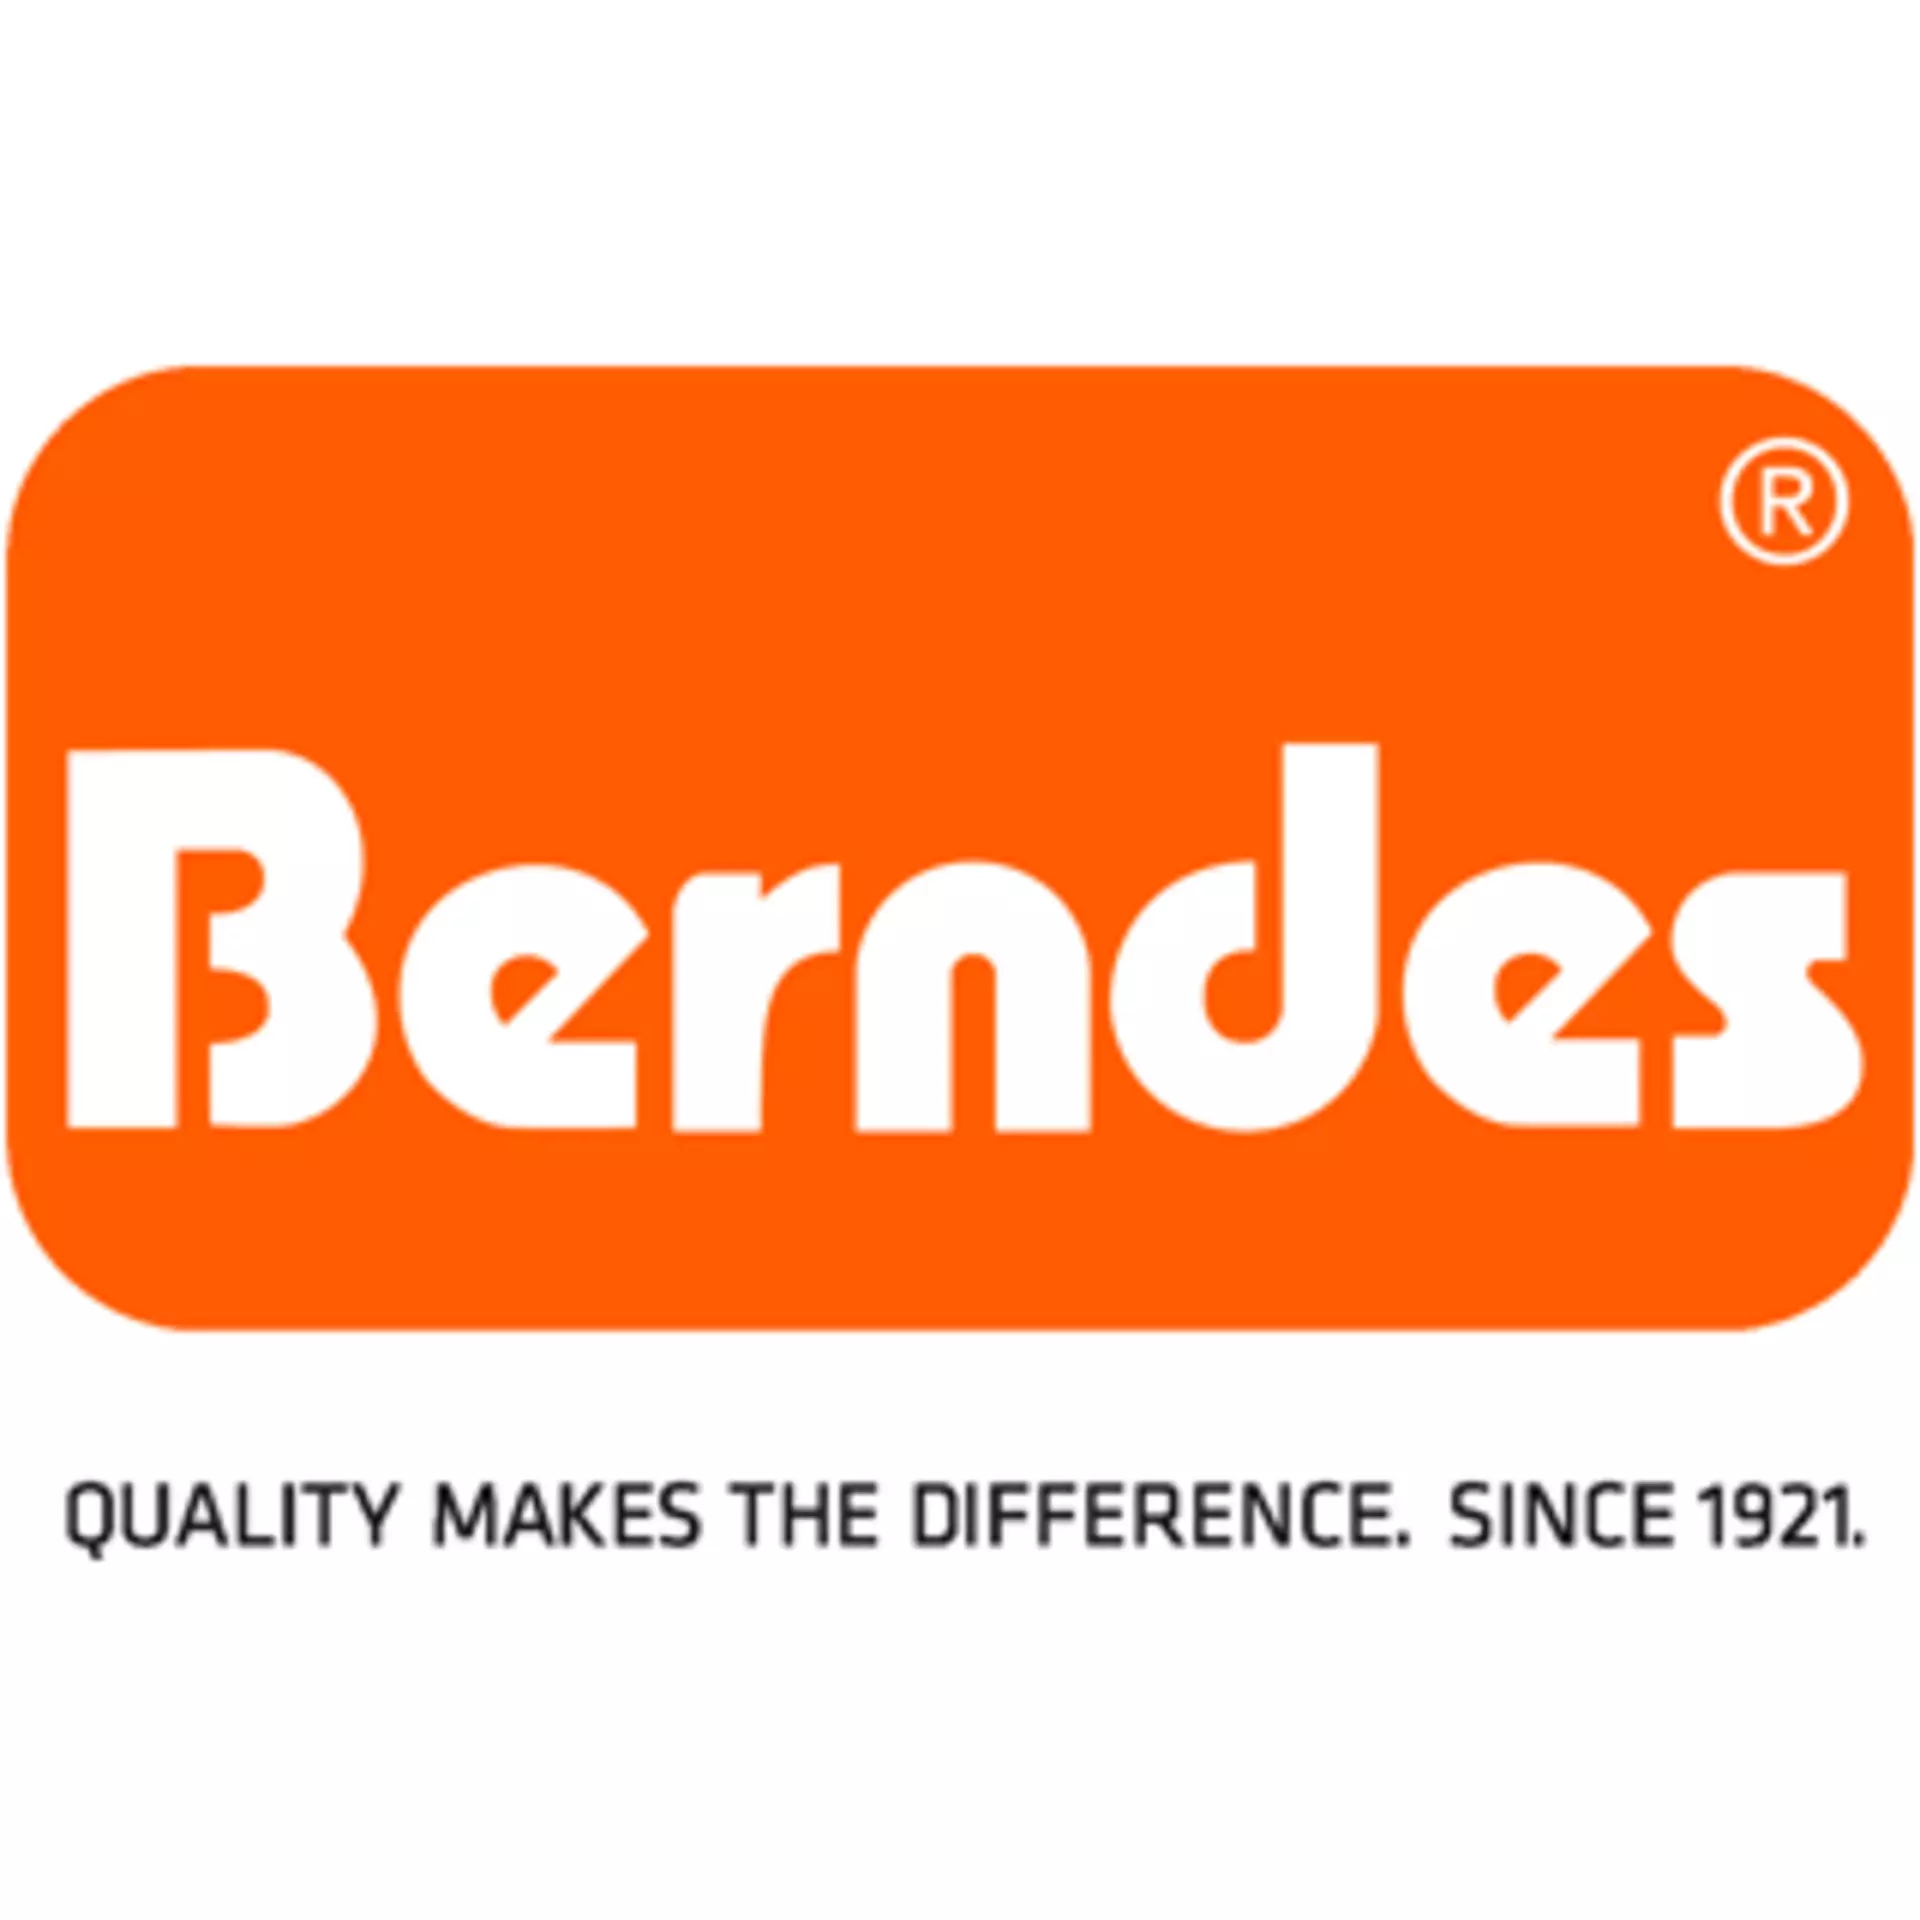 Logo der Marke Berndes - hochwertiges Kochgeschirr seit 1921